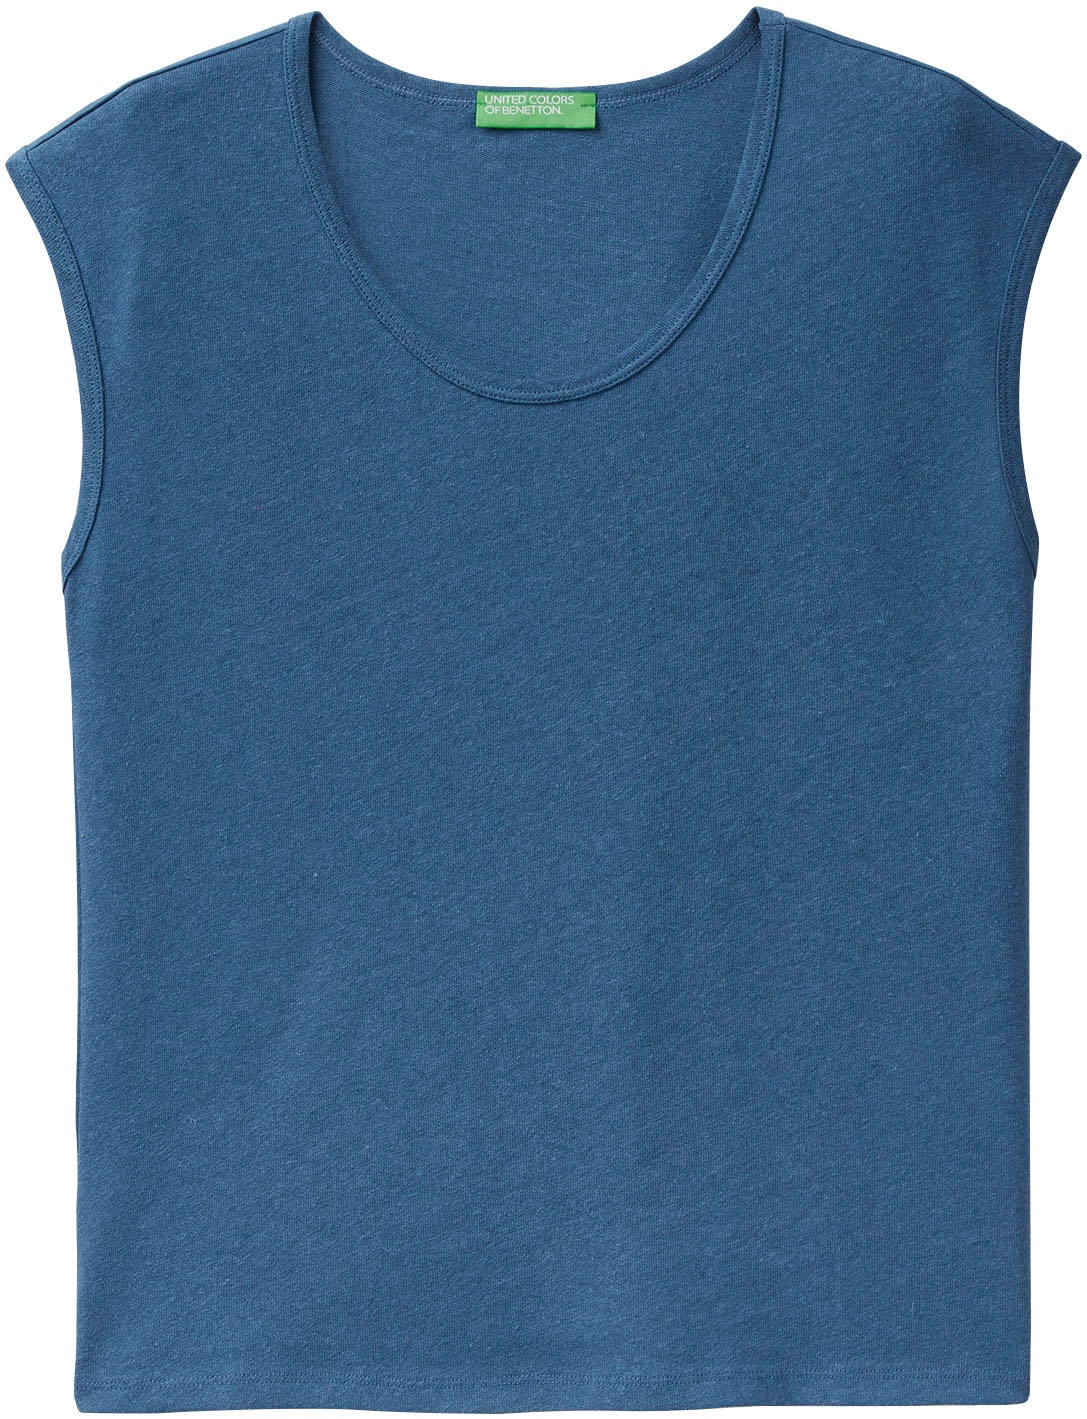 T-Shirt, of Rundhalsausschnitt Colors bestellen United mit Benetton